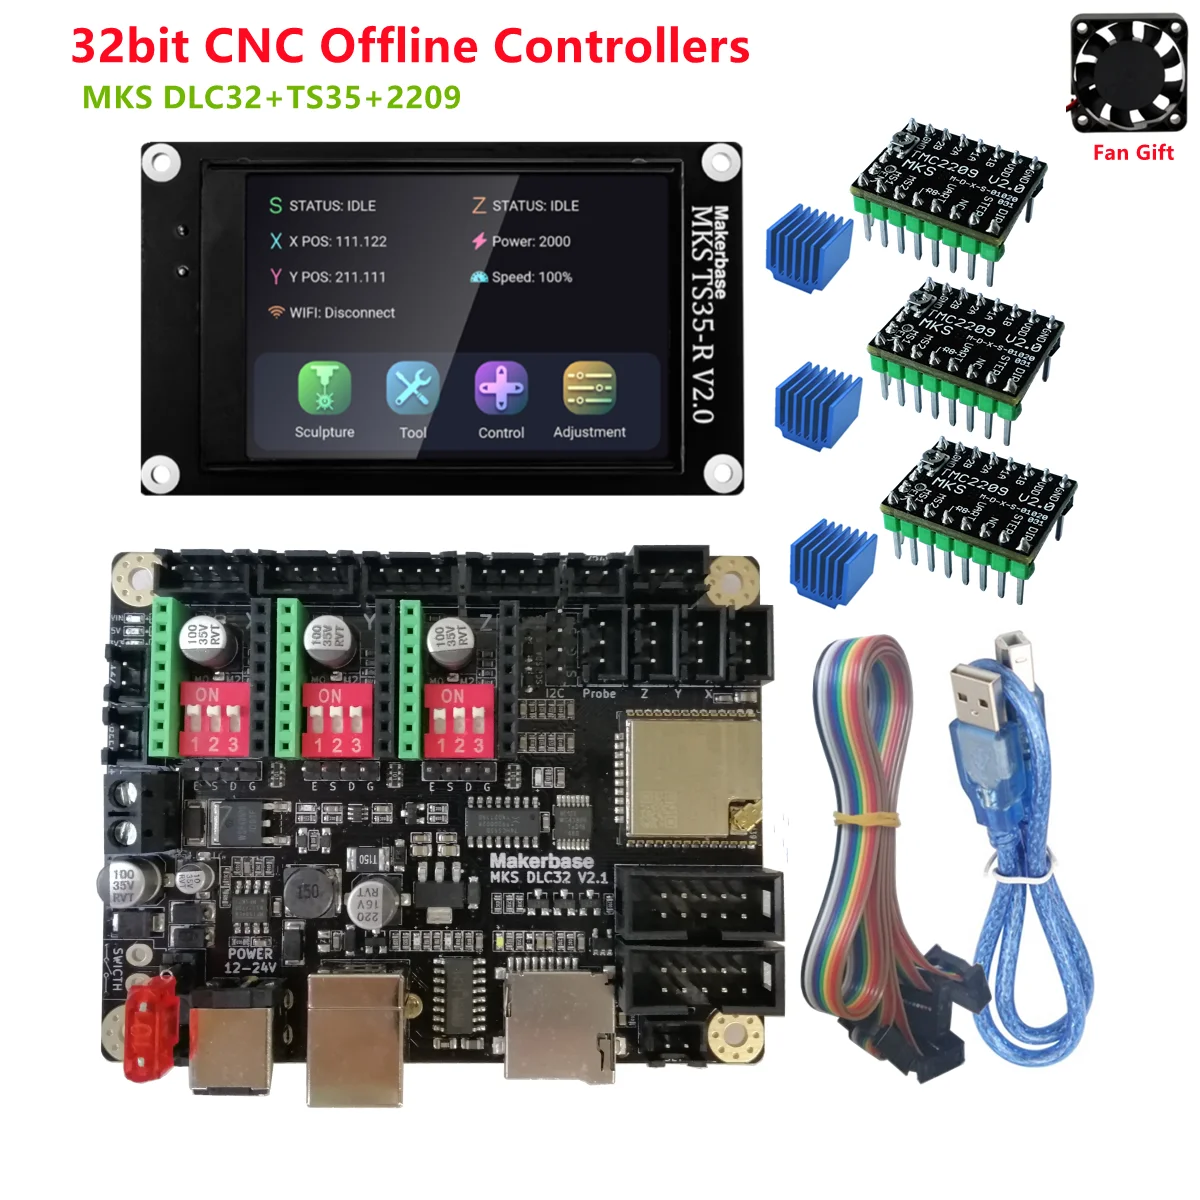 MKS DLC32 offline controller 32bits ESP32 control card TS35-R V2.0 LCD CNC 3020 MAX upgrade parts for desktop engraving machine synchronous timing belt 3D Printer Parts & Accessories